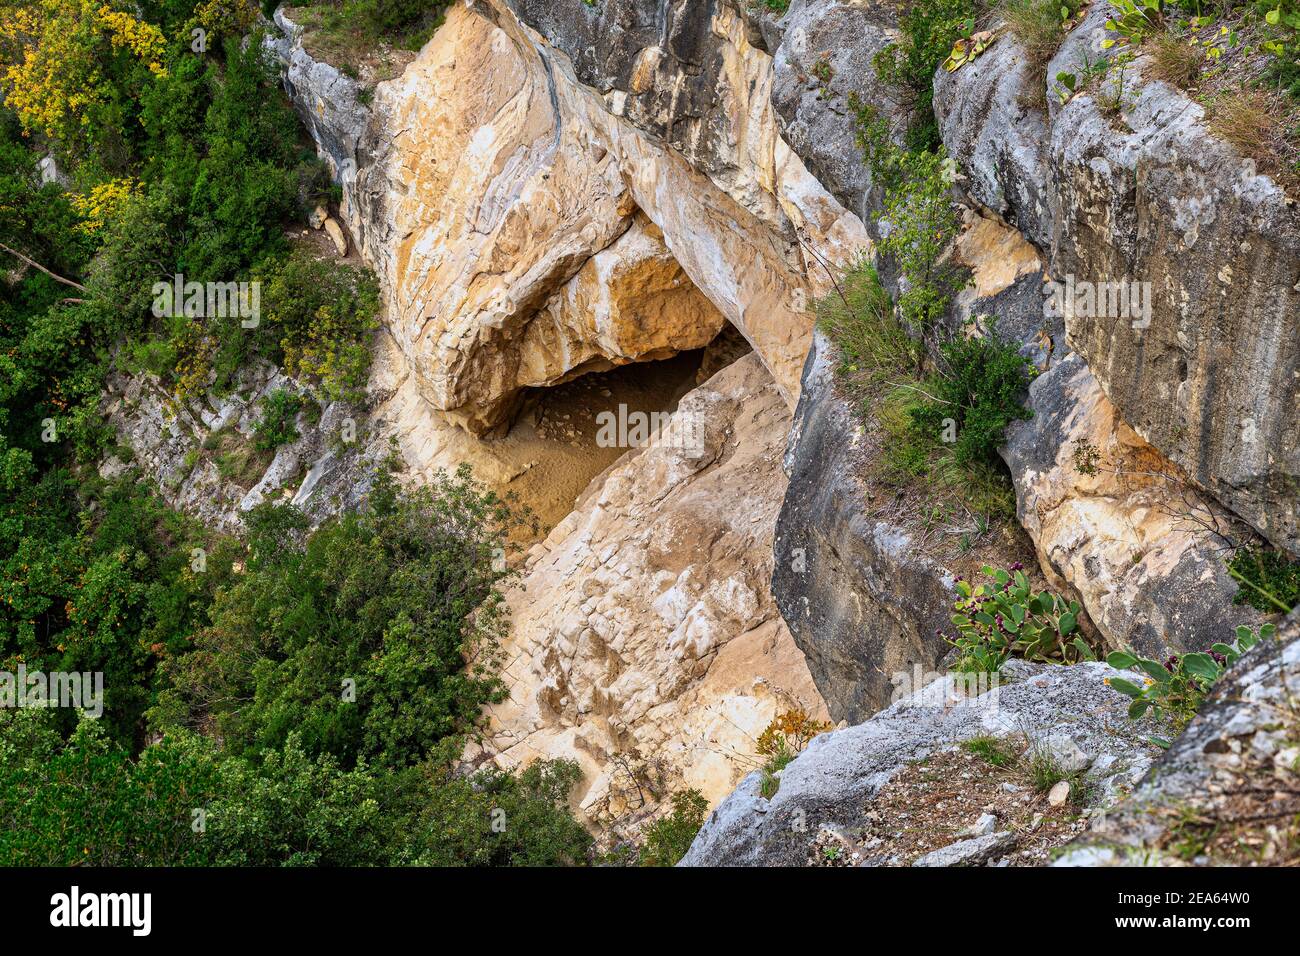 Grotta preistorica in alta montagna. Foto Stock